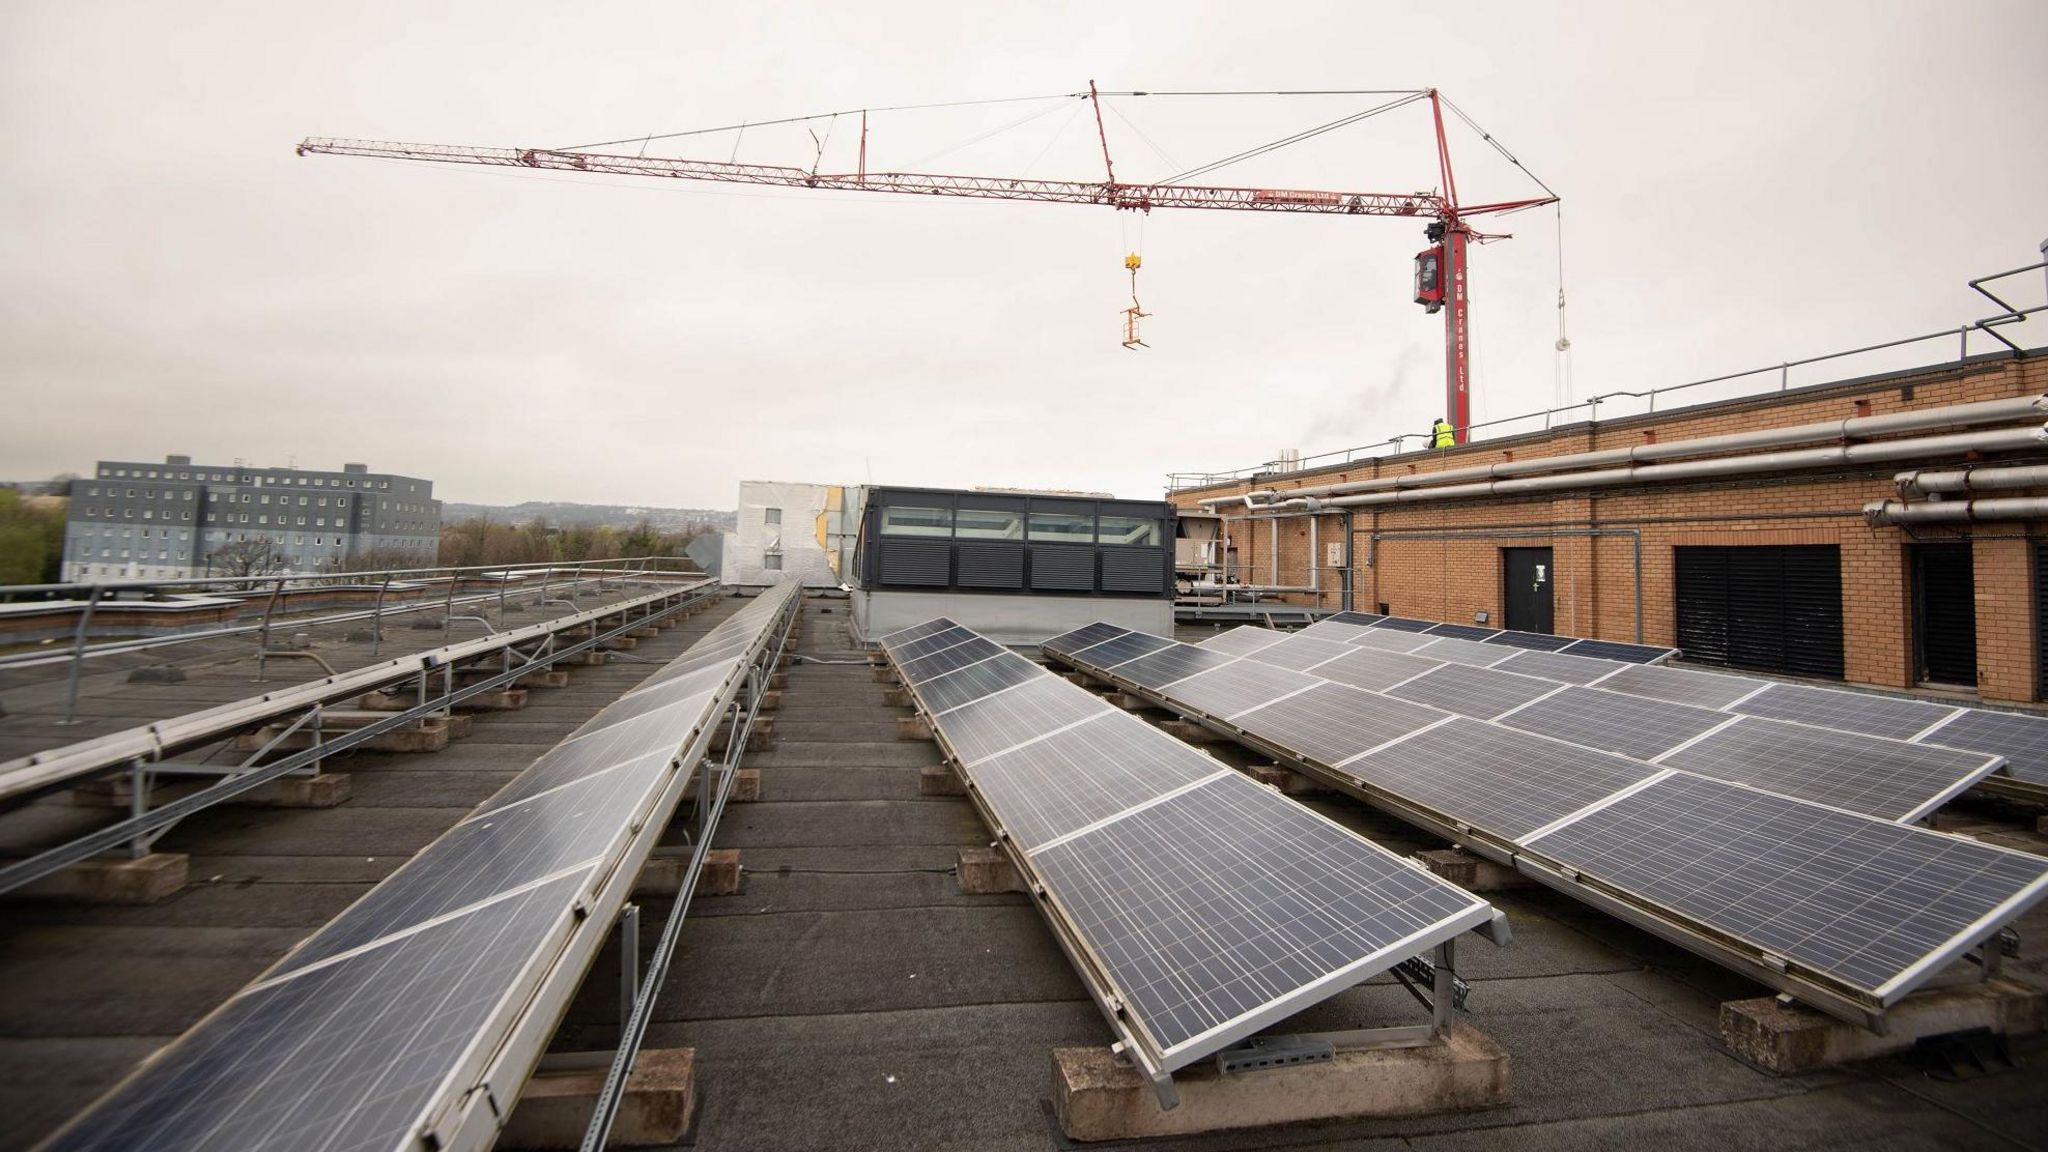 Solar panels on the university roof